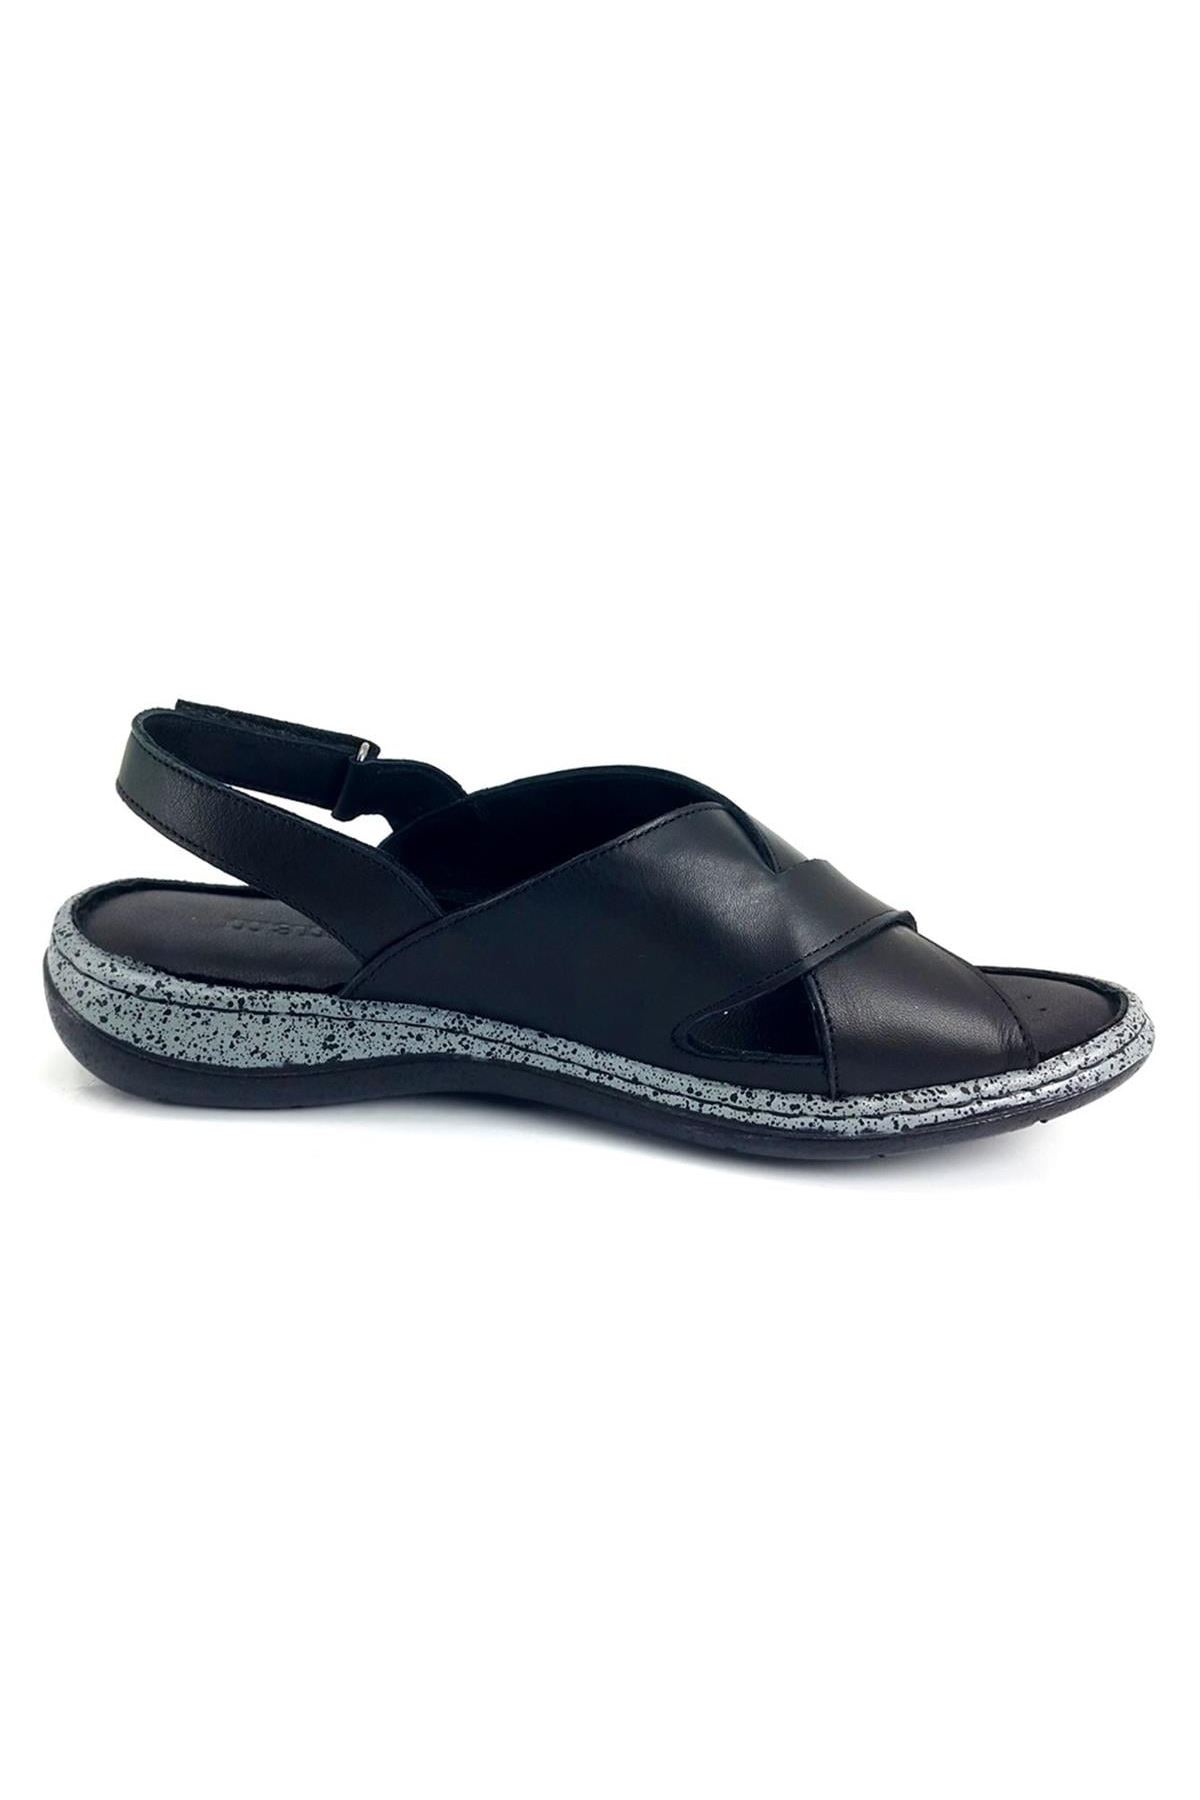 Mammamia D23YS-1085 Deri Comfort Kadın Sandalet - Siyah